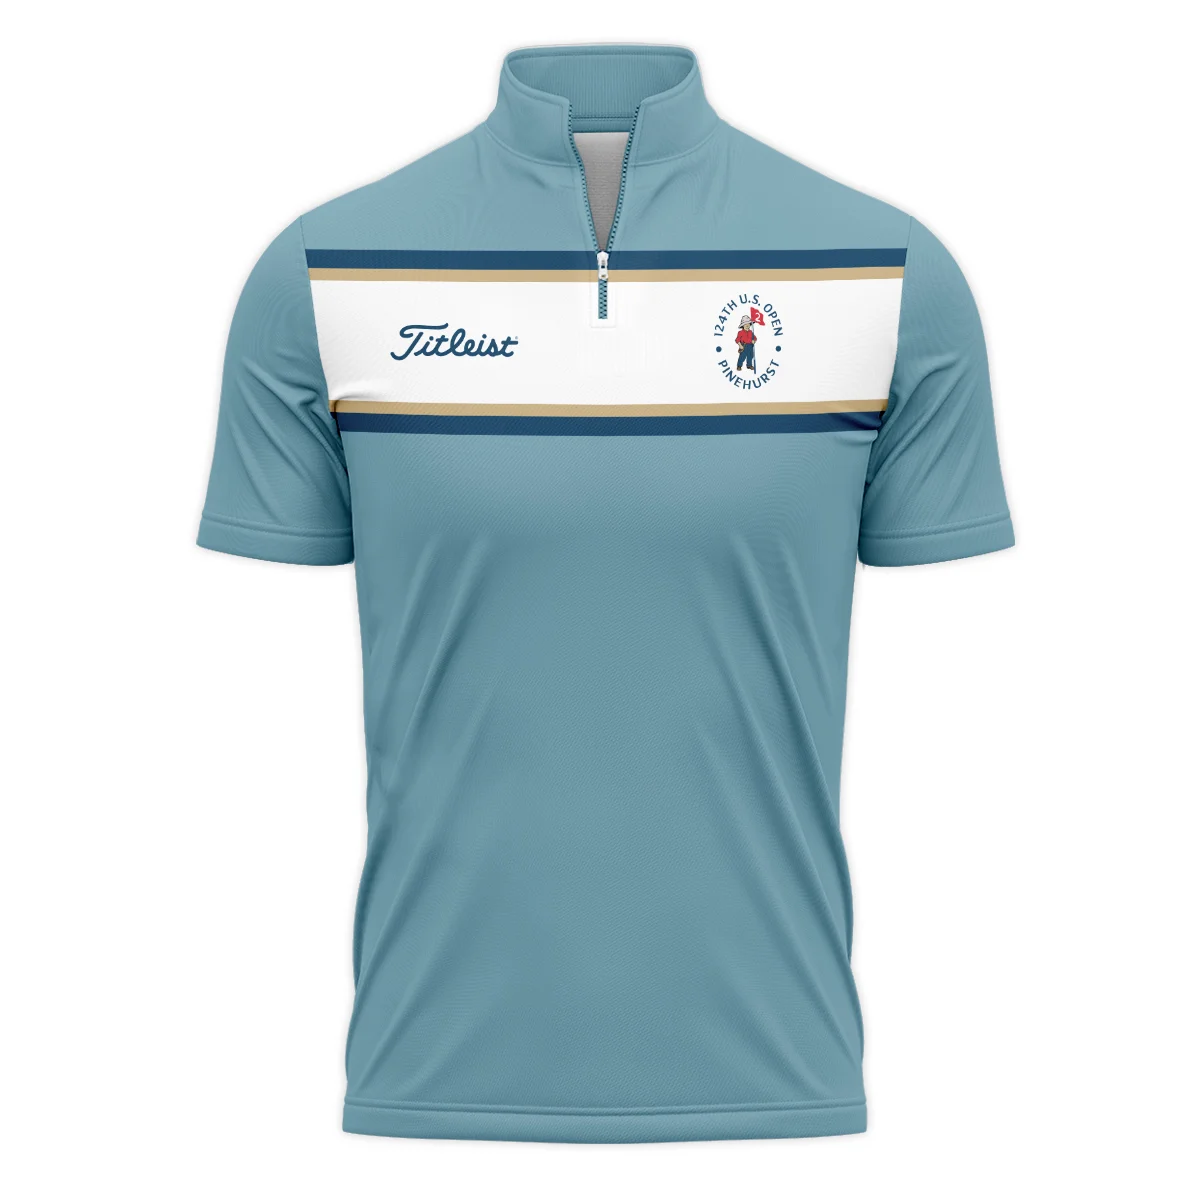 124th U.S. Open Pinehurst Golf Sport Mostly Desaturated Dark Blue Yellow Titleist Hoodie Shirt Style Classic